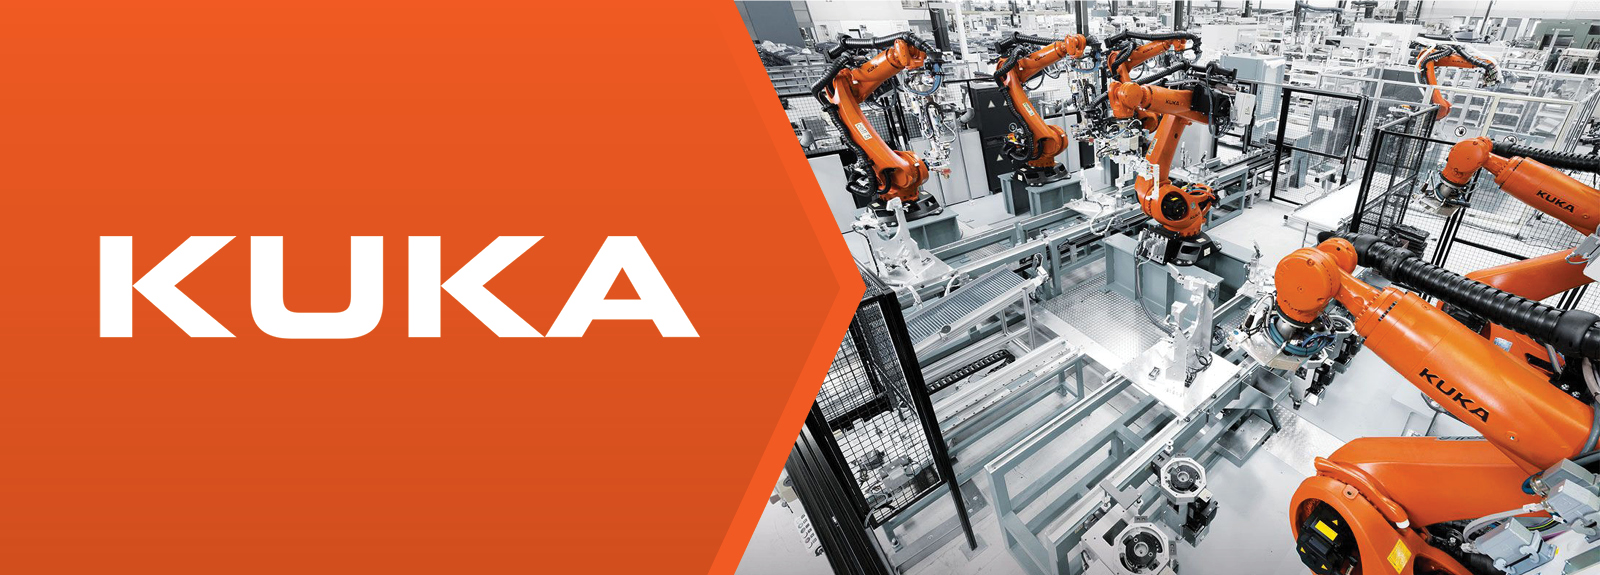 welding-robot-manufacturers-KUKA